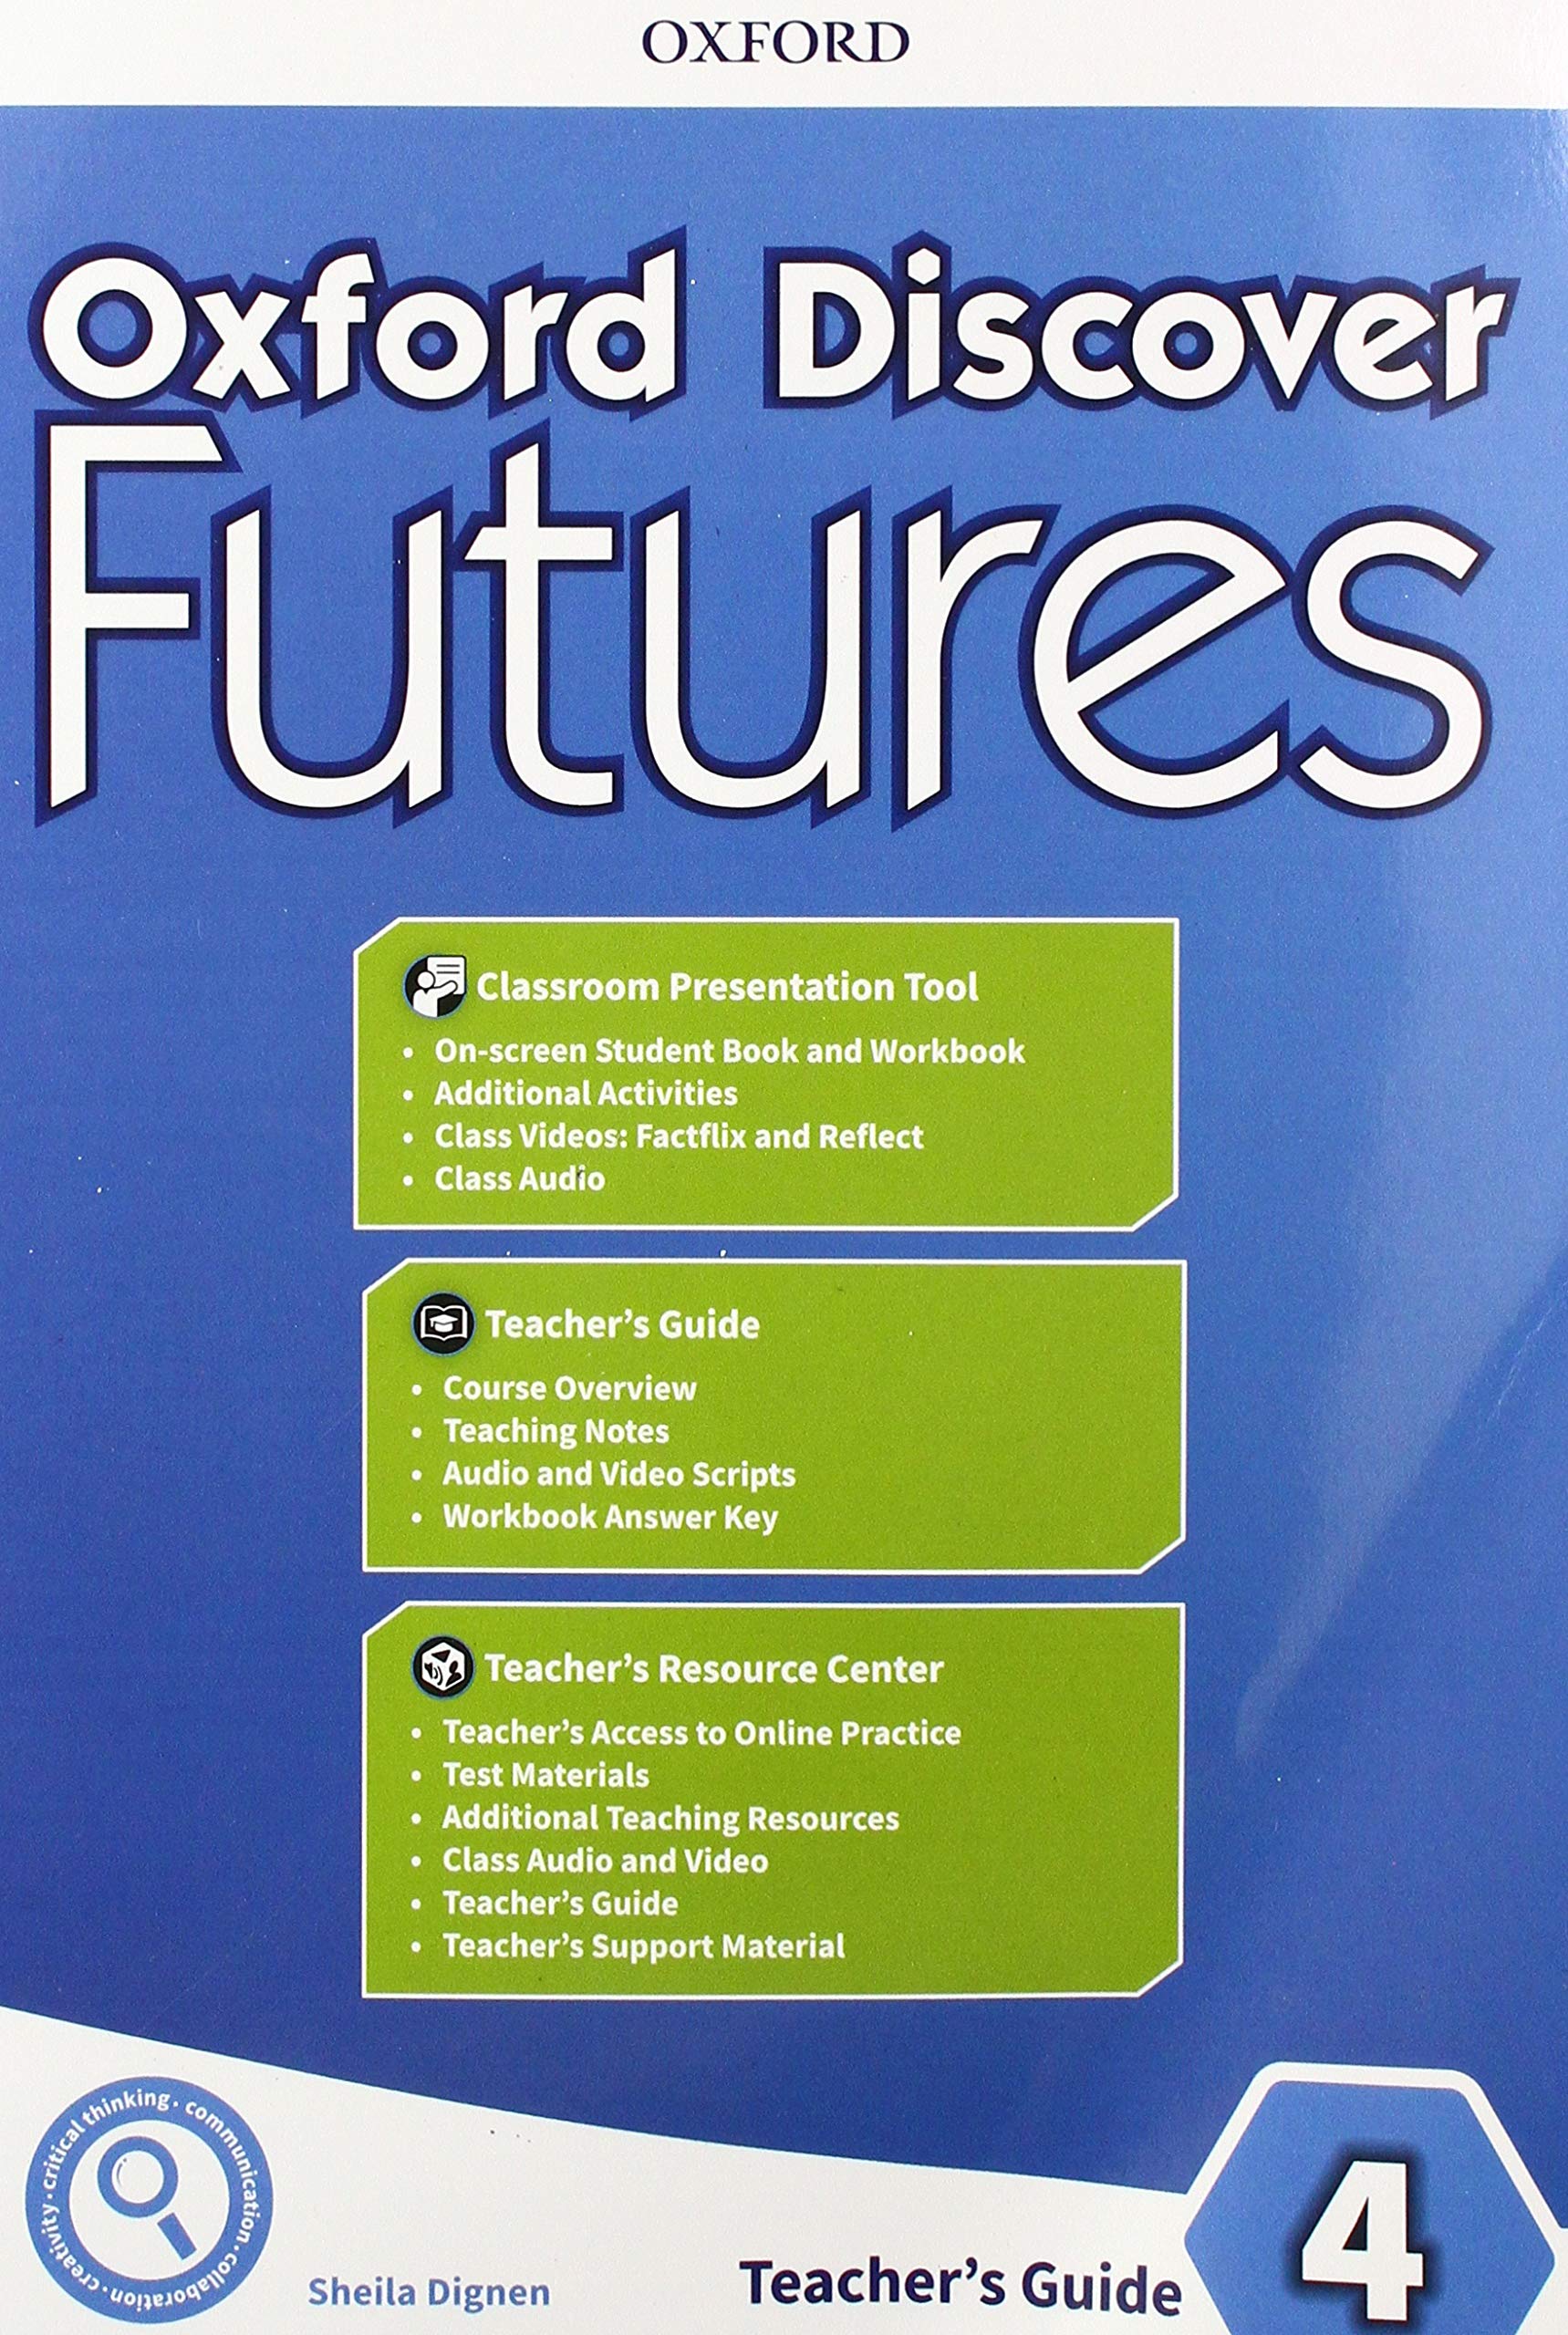 Oxford discover audio. Oxford discover Futures 4 Workbook. Oxford discover Futures. Oxford discover Futures 1. Oxford Discovery Future.